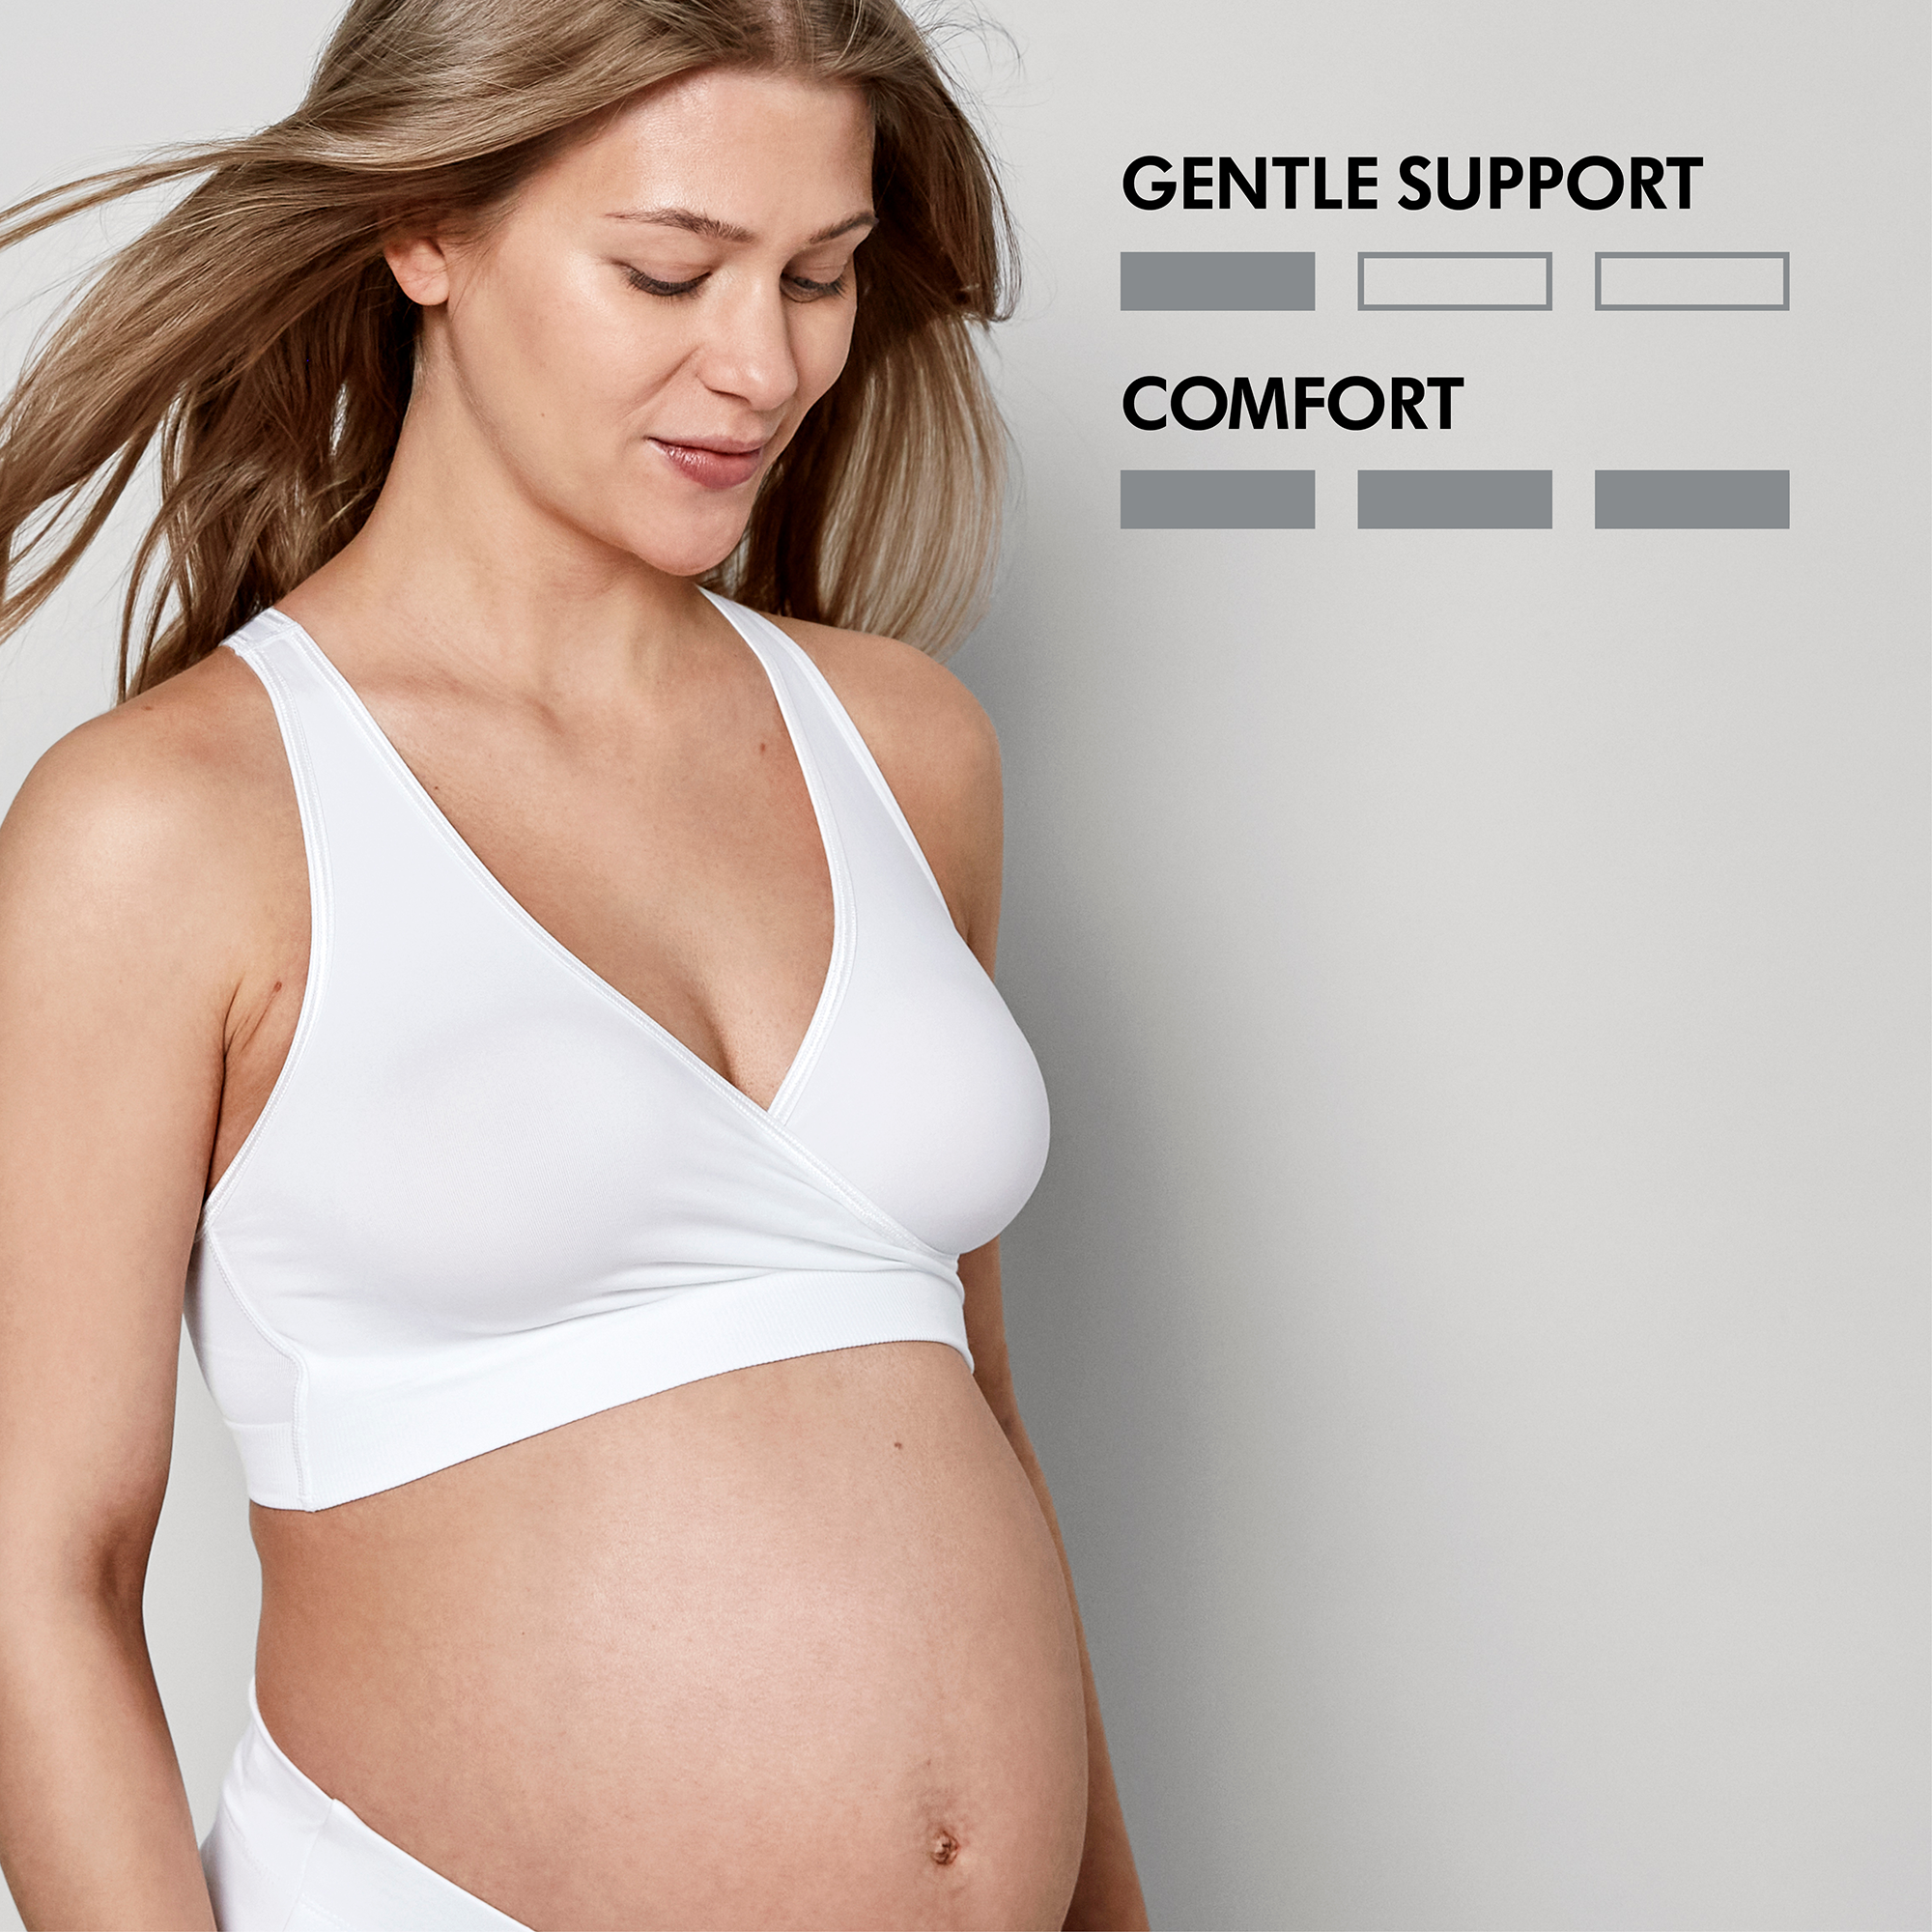 Keep Cool Breathable Maternity & Nursing Bra